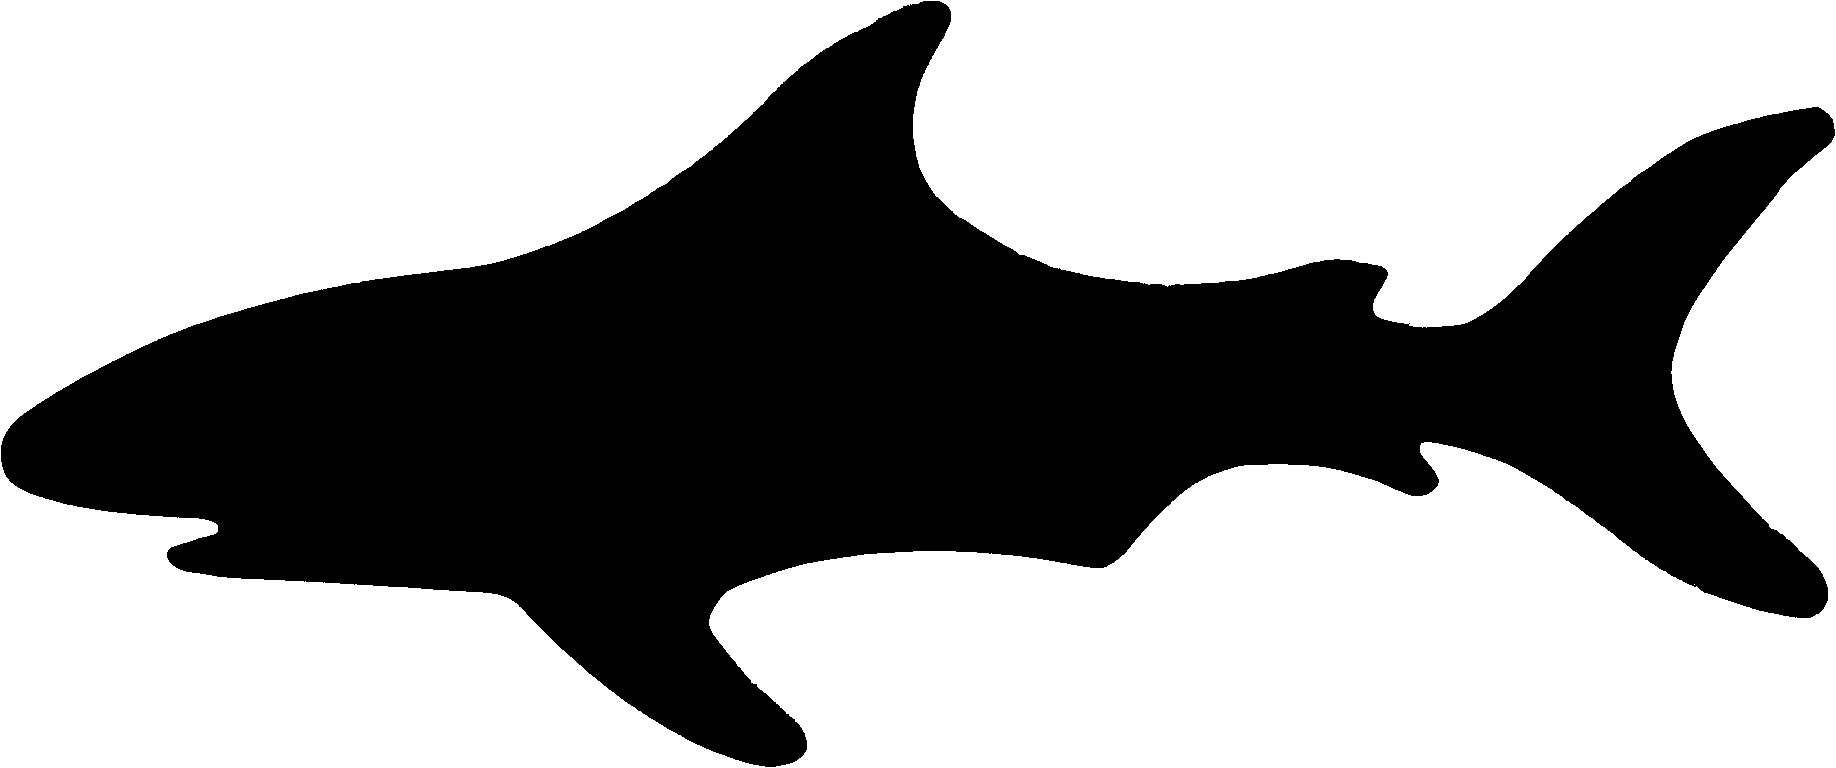 Kayaking clipart illustration. Mean shark clip art